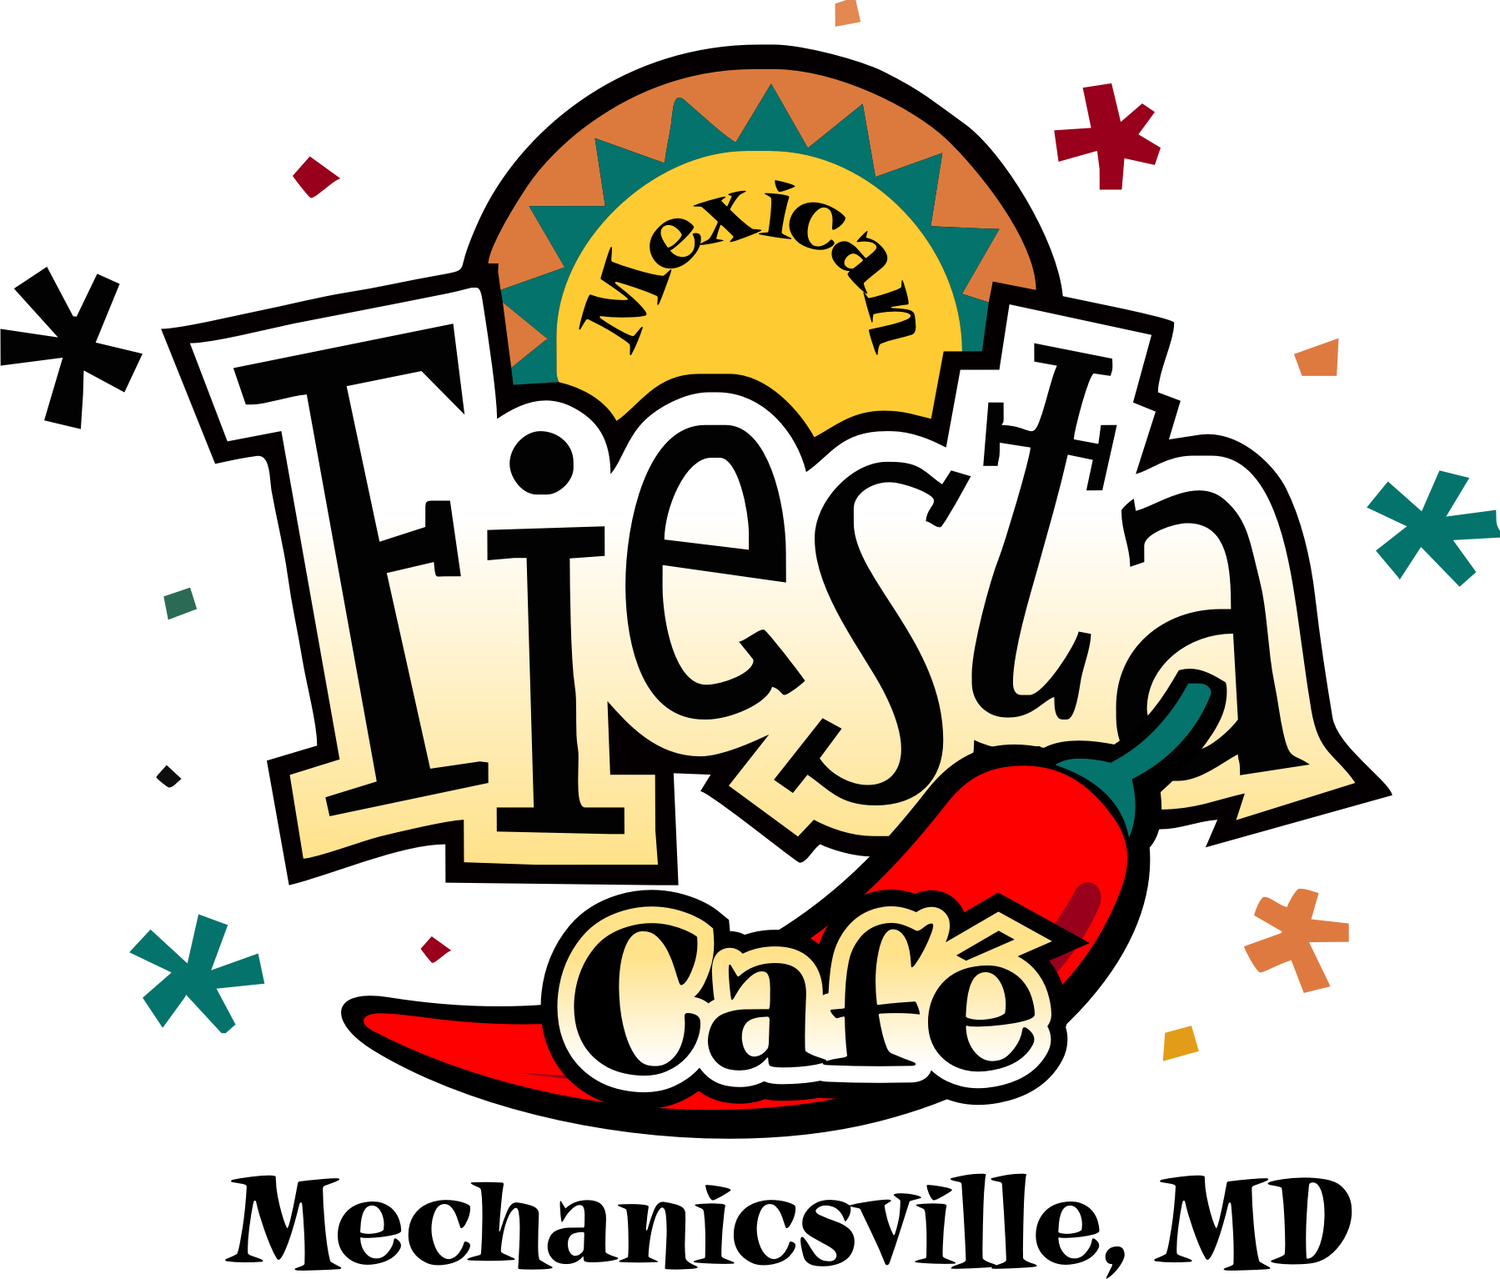 Fiesta Cafe